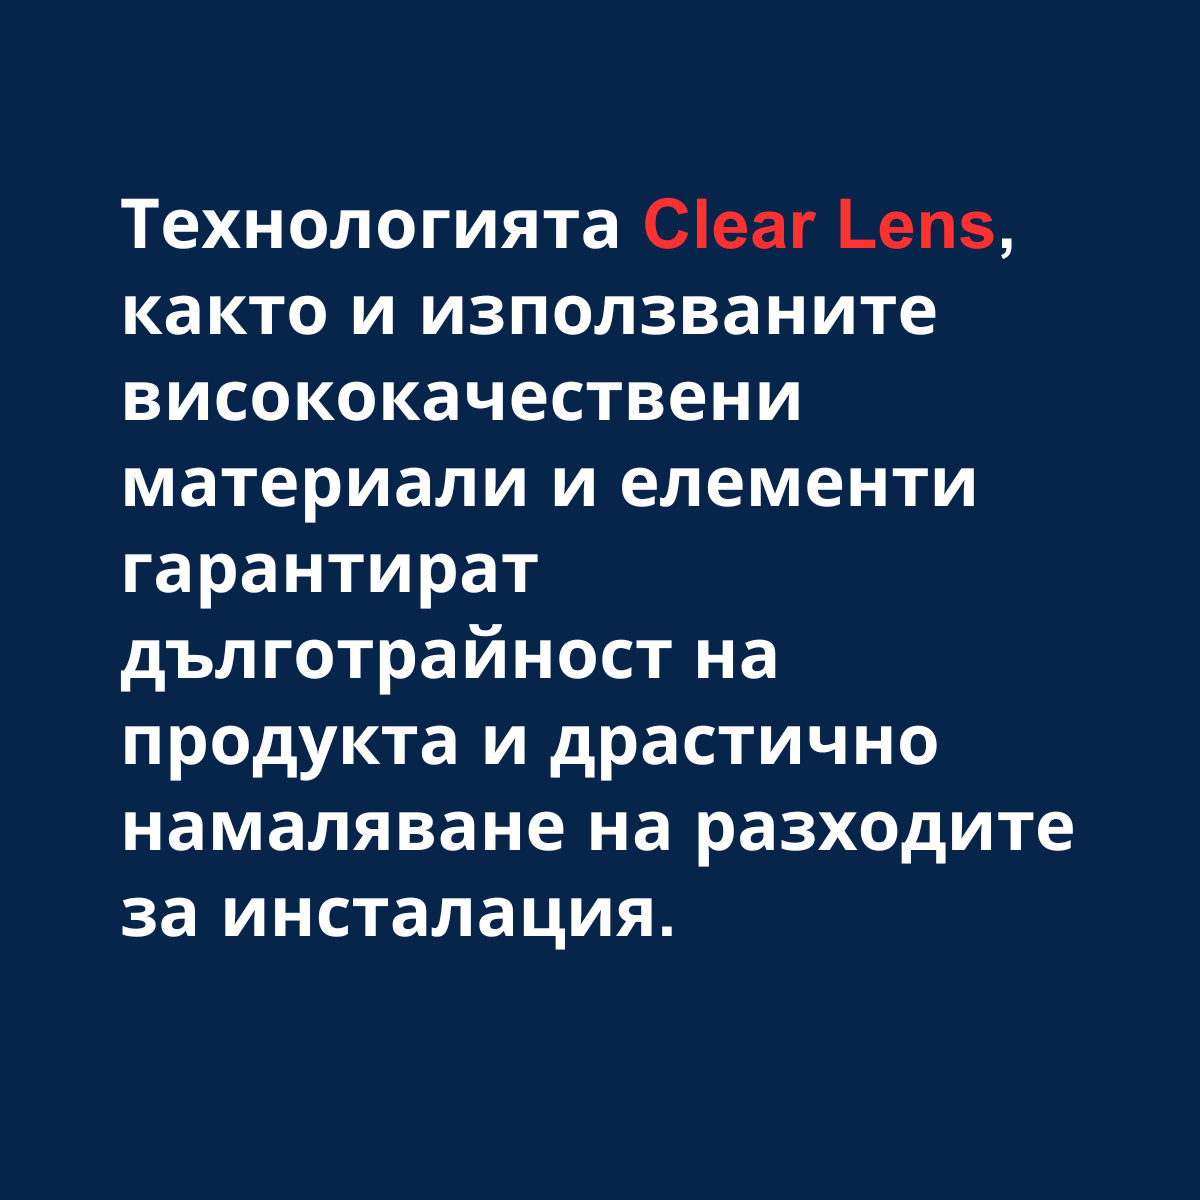 ClearLens технология